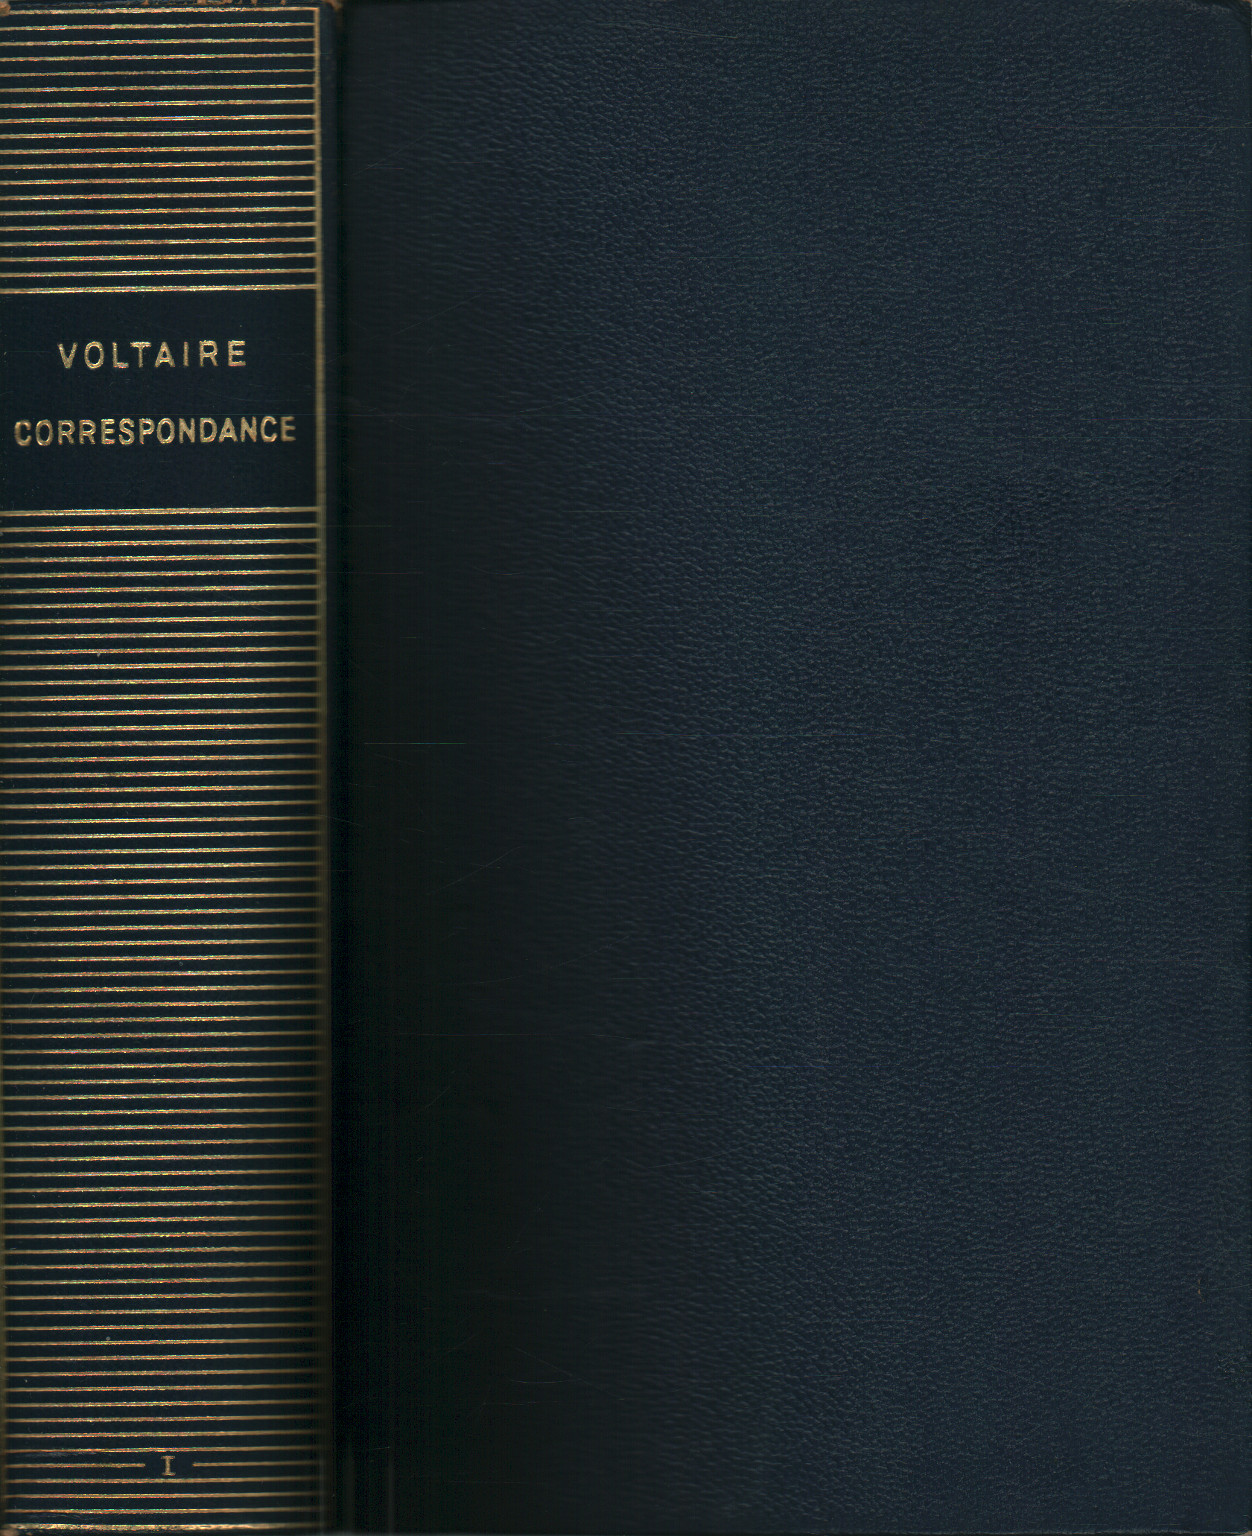 Corrispondance de Voltaire (tomo I), s.una.